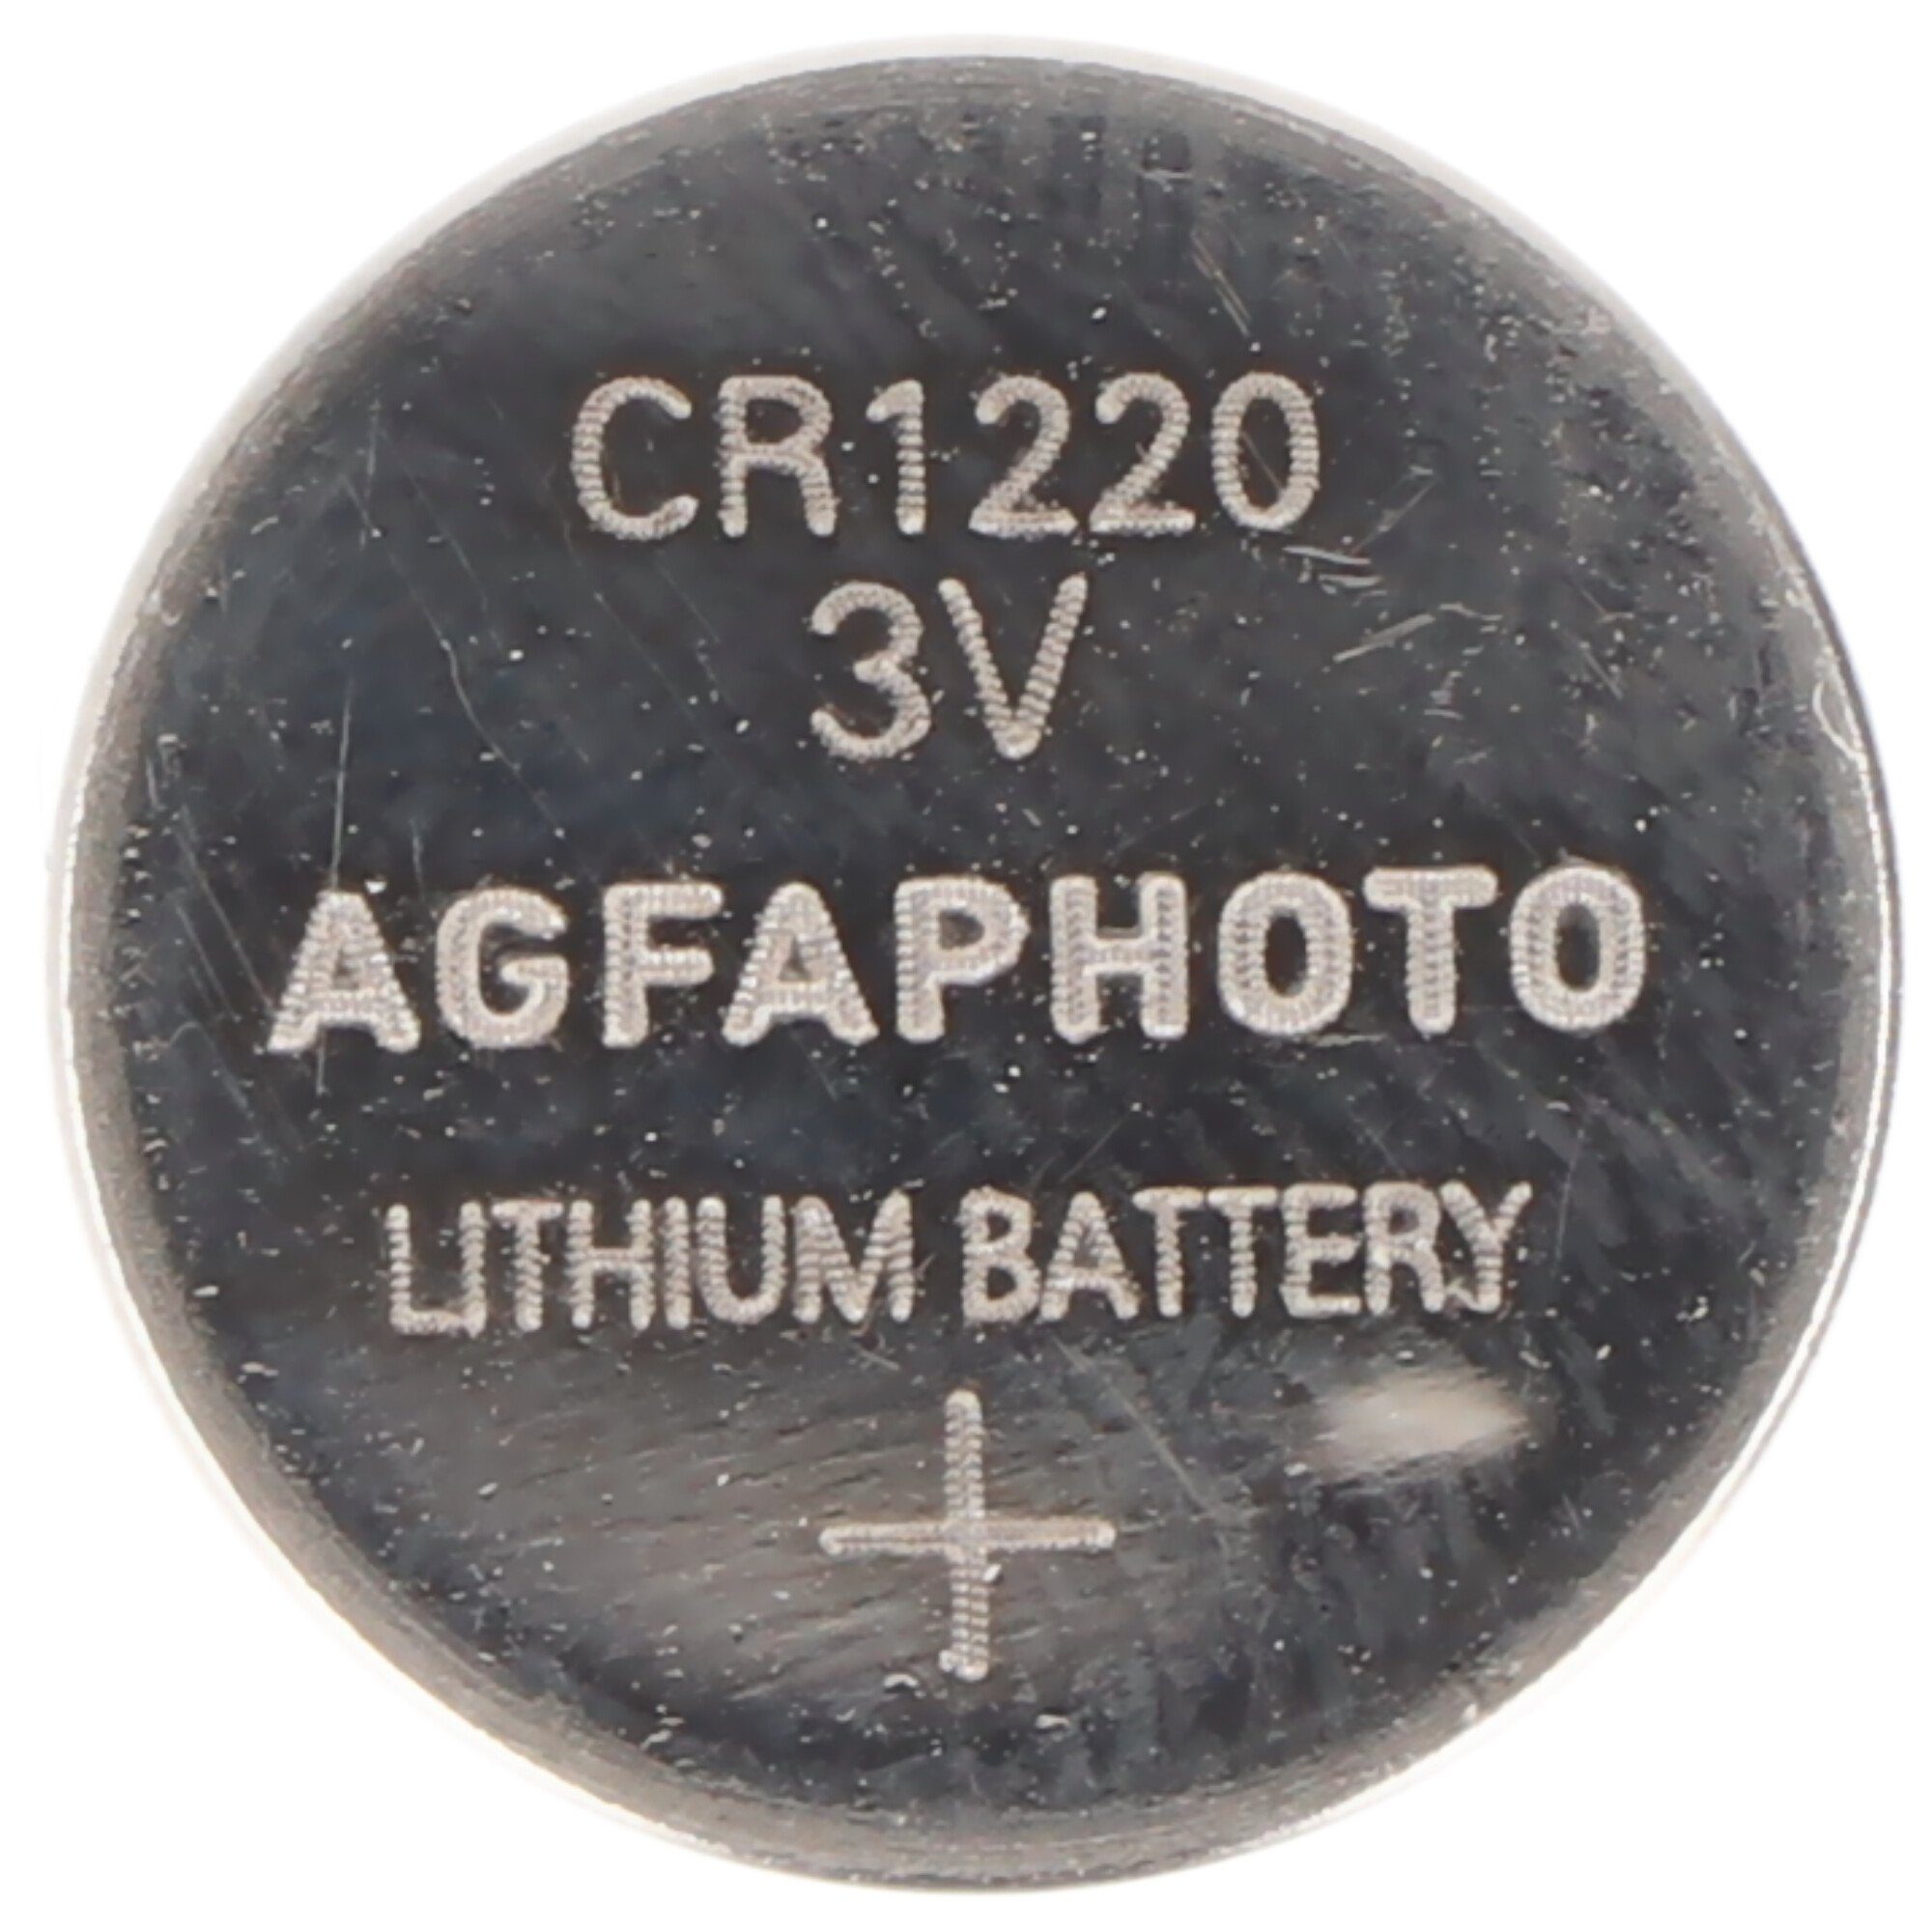 Knopfzelle Knopfzelle, 3V CR1220, Lithium, Batterie Agfaphoto Bl Extreme, Retail AgfaPhoto